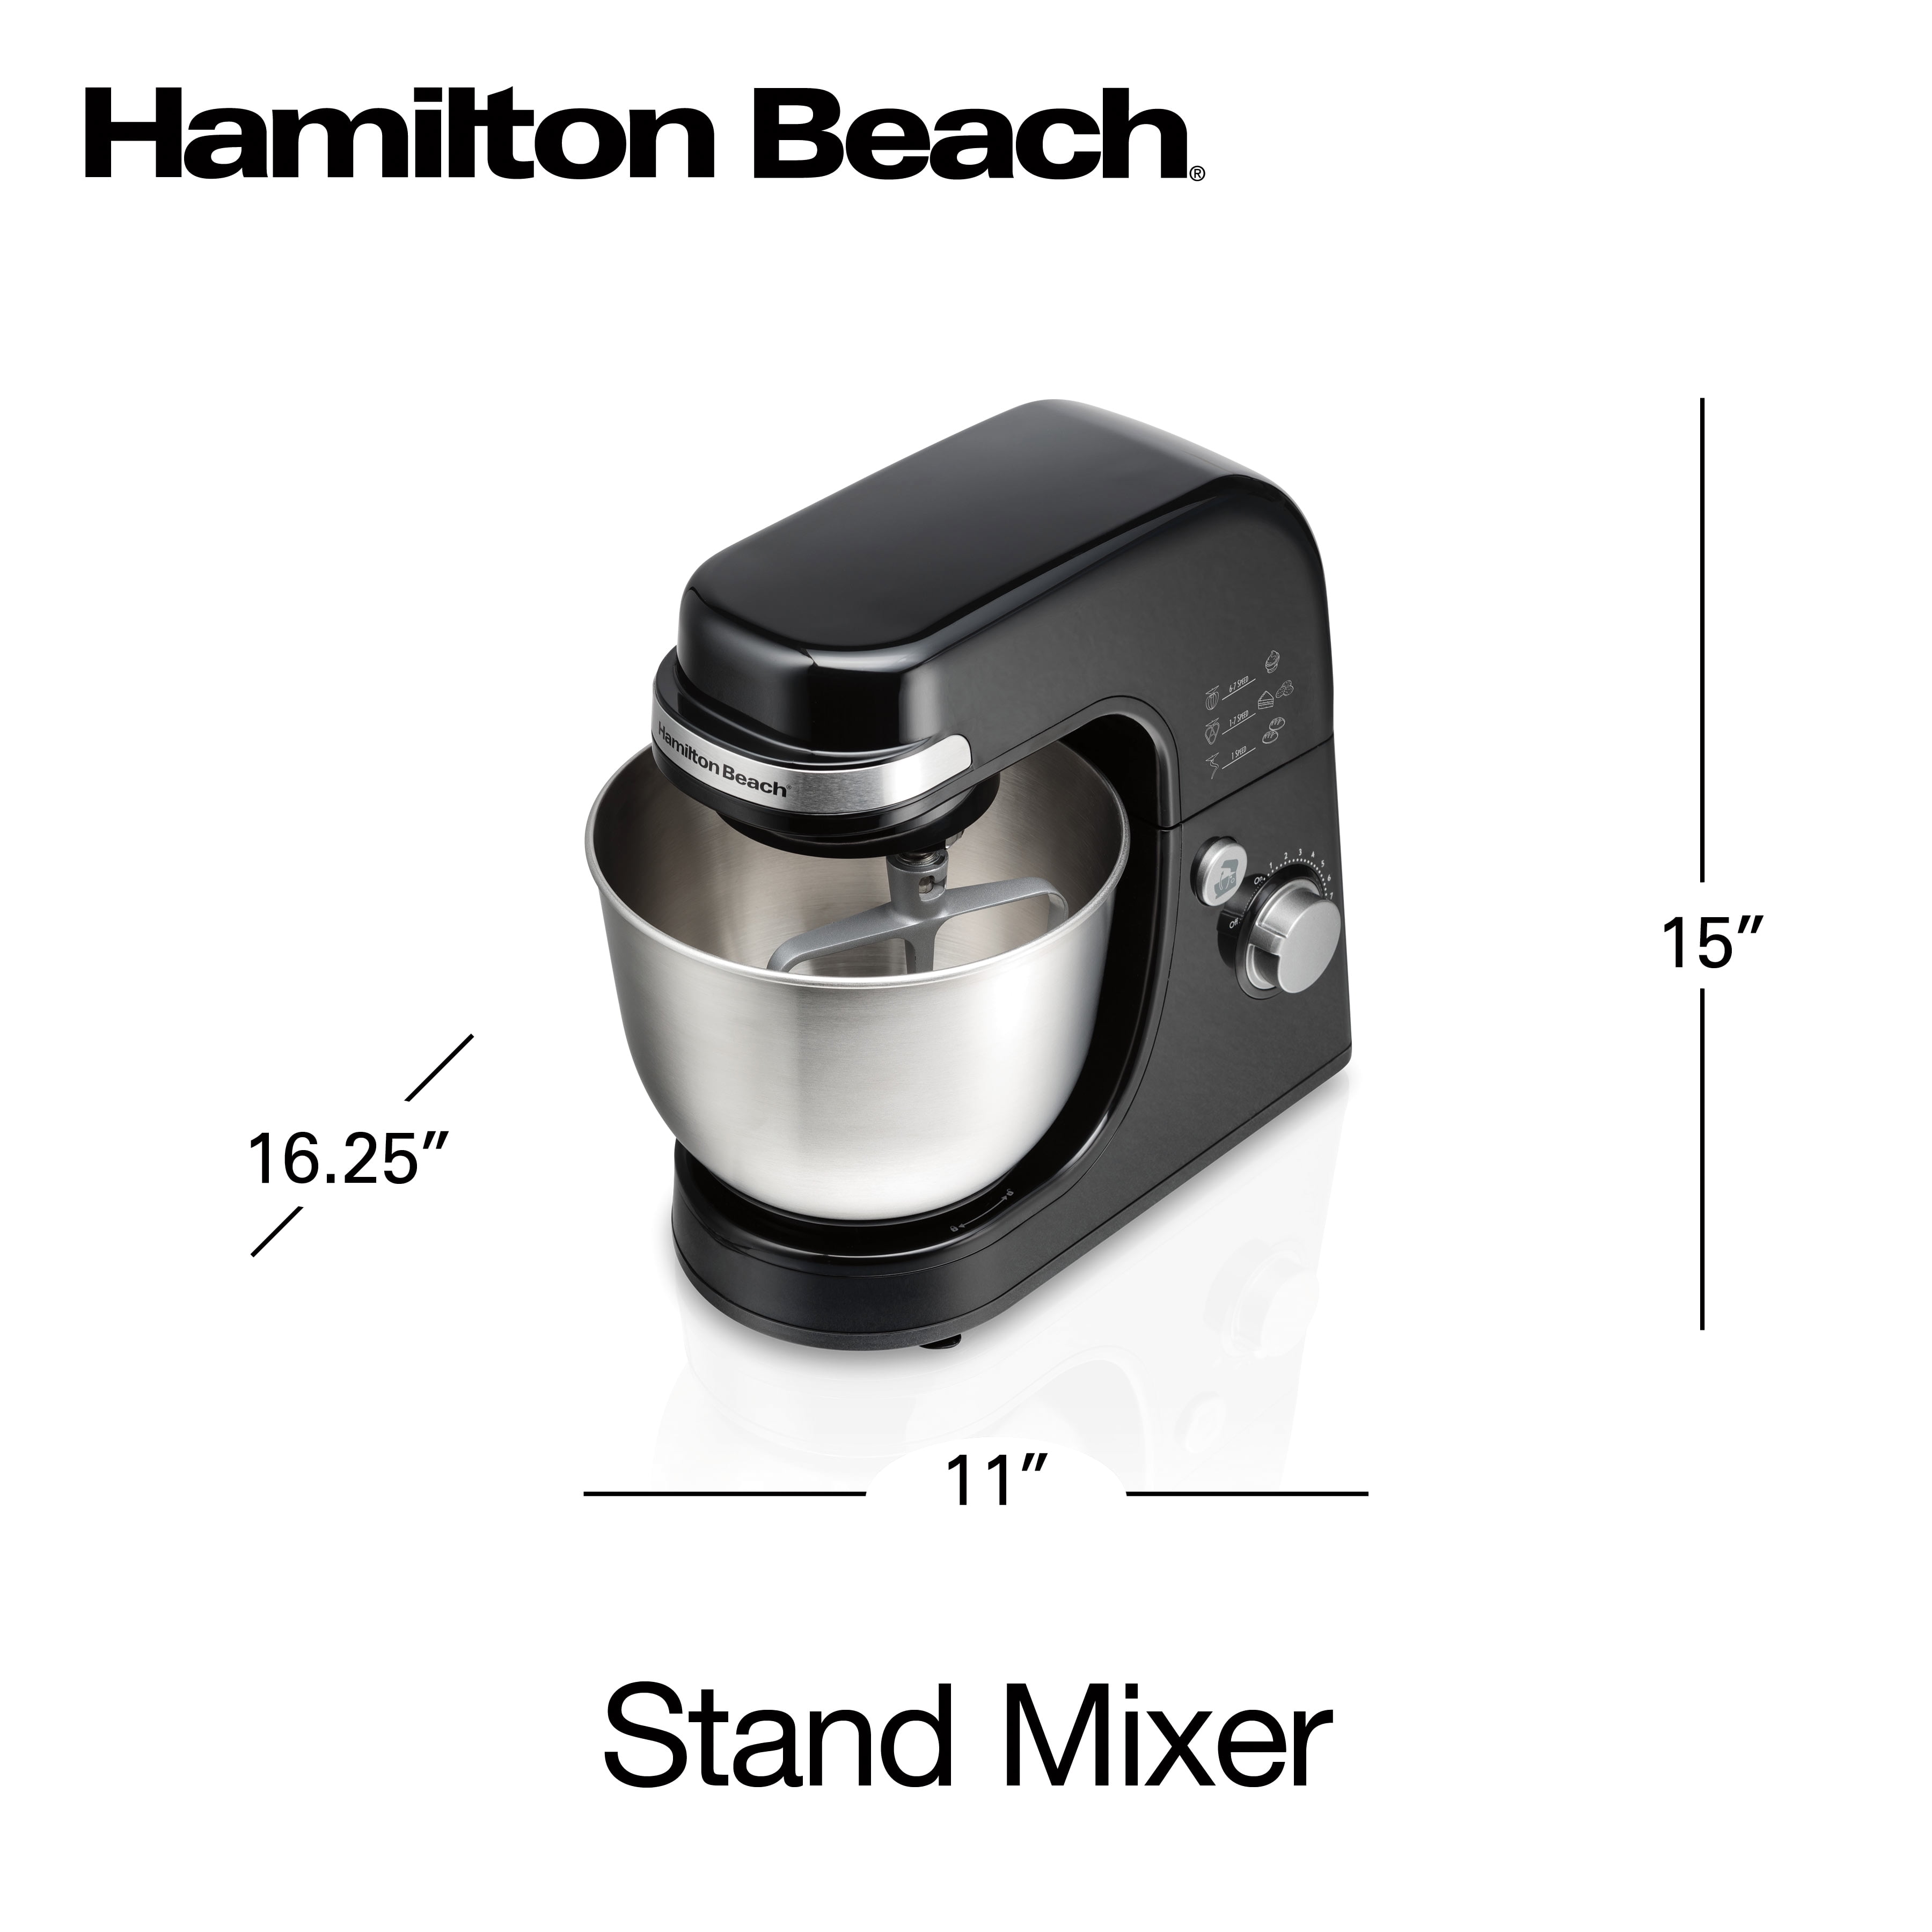 Hamilton Beach 6332 3.5-Quart Mixer - charcoal gray/stainless